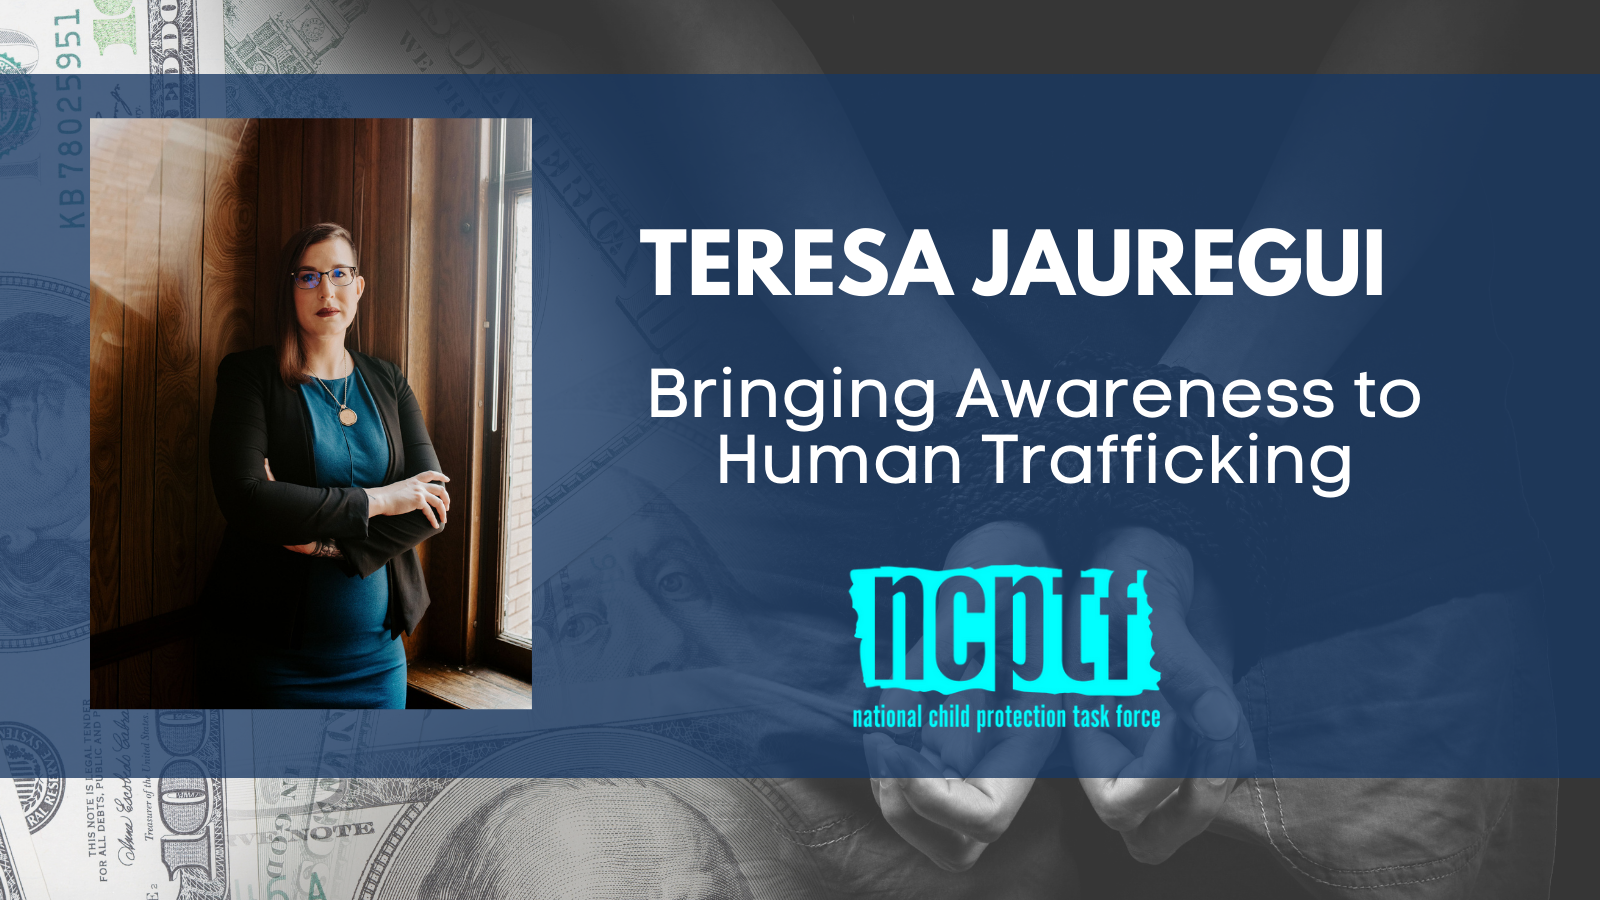 Meet Teresa Jauregui: Bringing Awareness to Human Trafficking